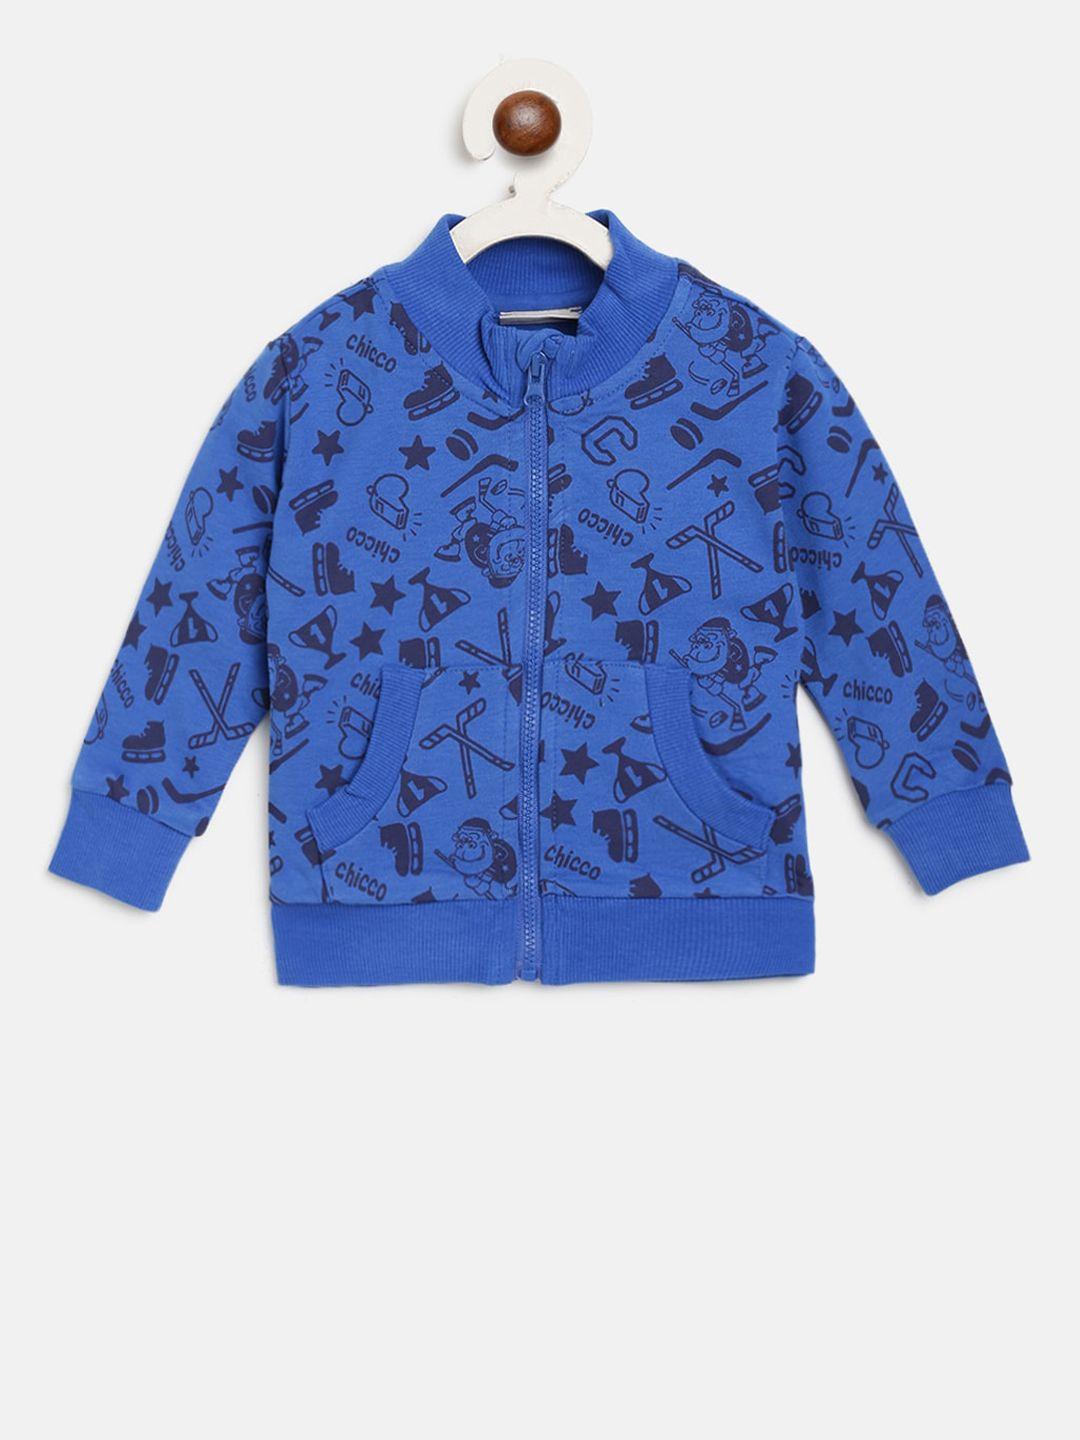 chicco boys blue printed cardigan sweater